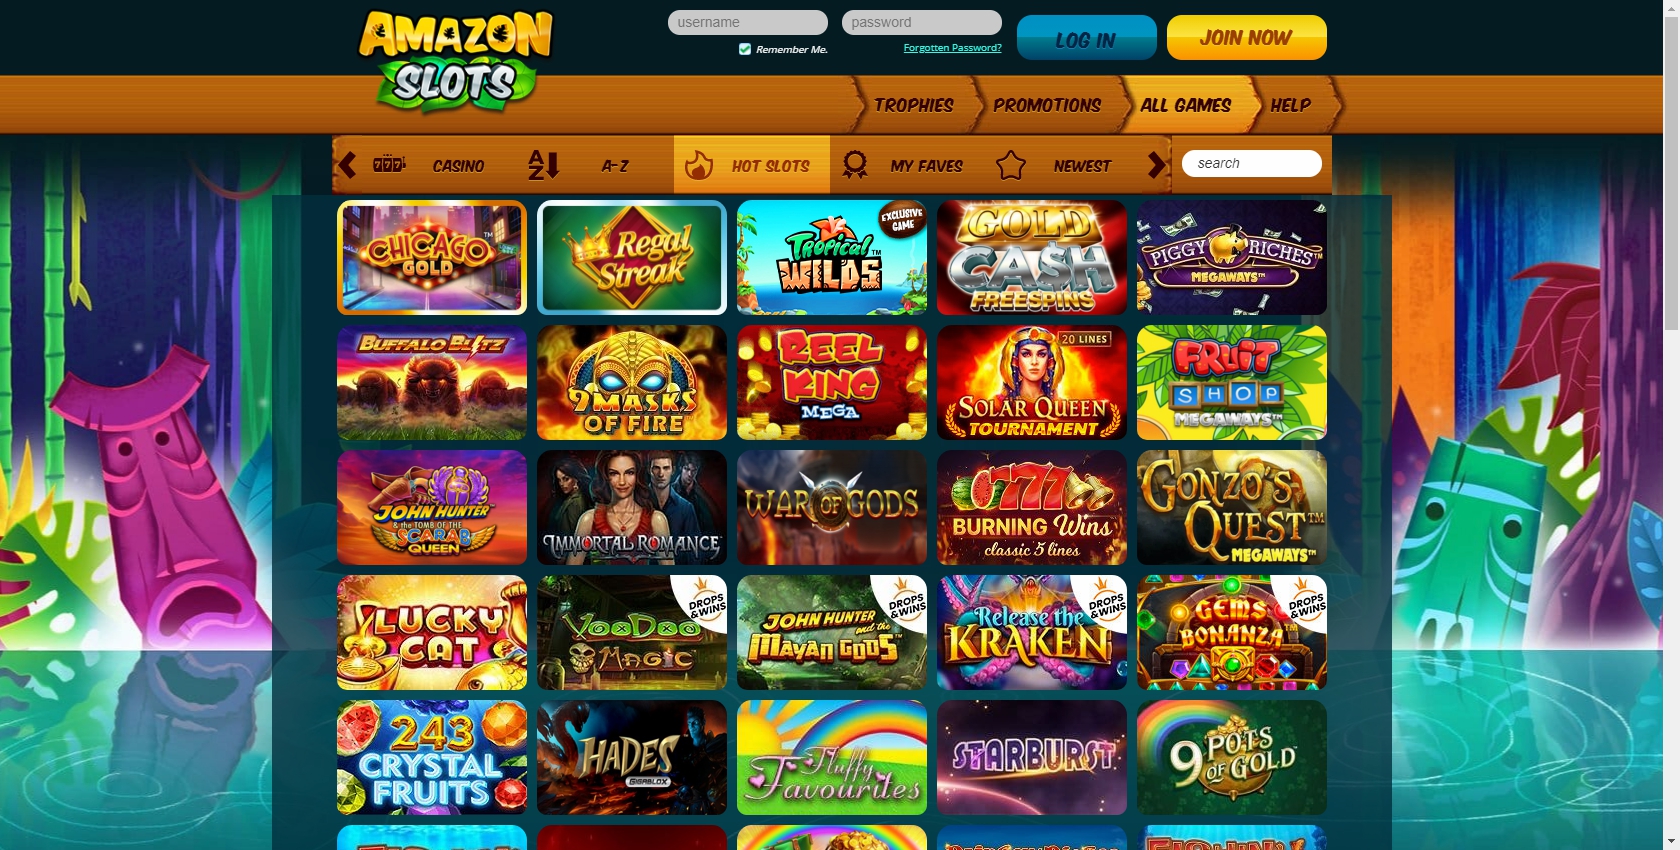 Amazon Slots Casino Games